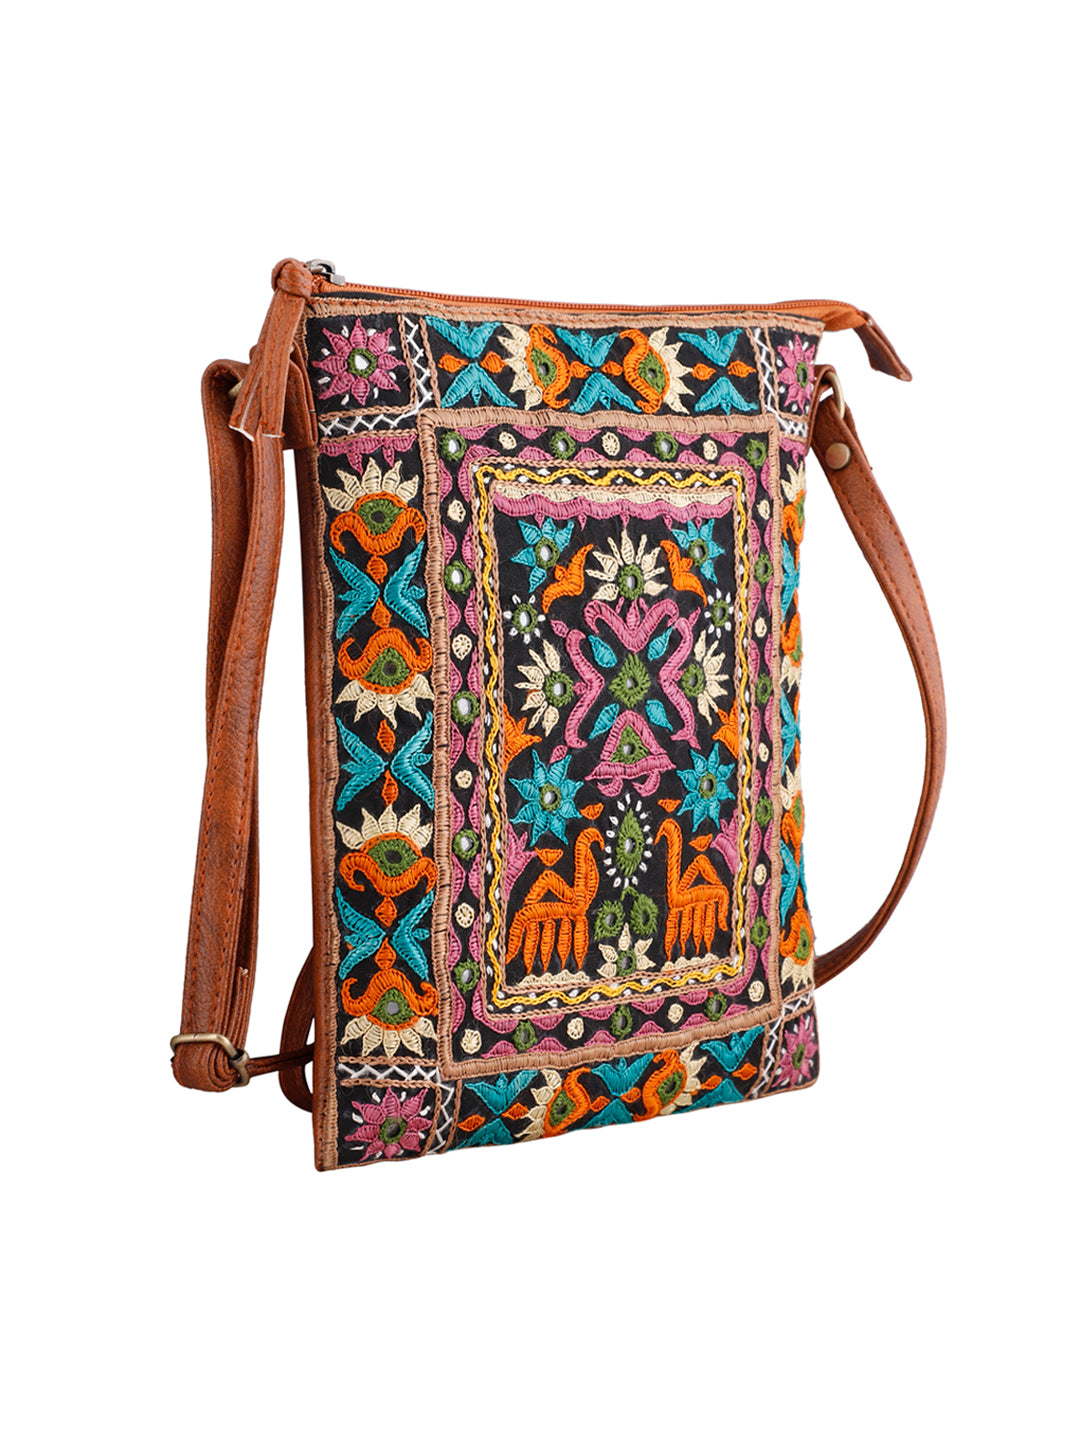 Hippie bag Hobo purse Crossbody bag Gypsy bag, cross body purse sling bag ,shoulder bags for women hand embroidered